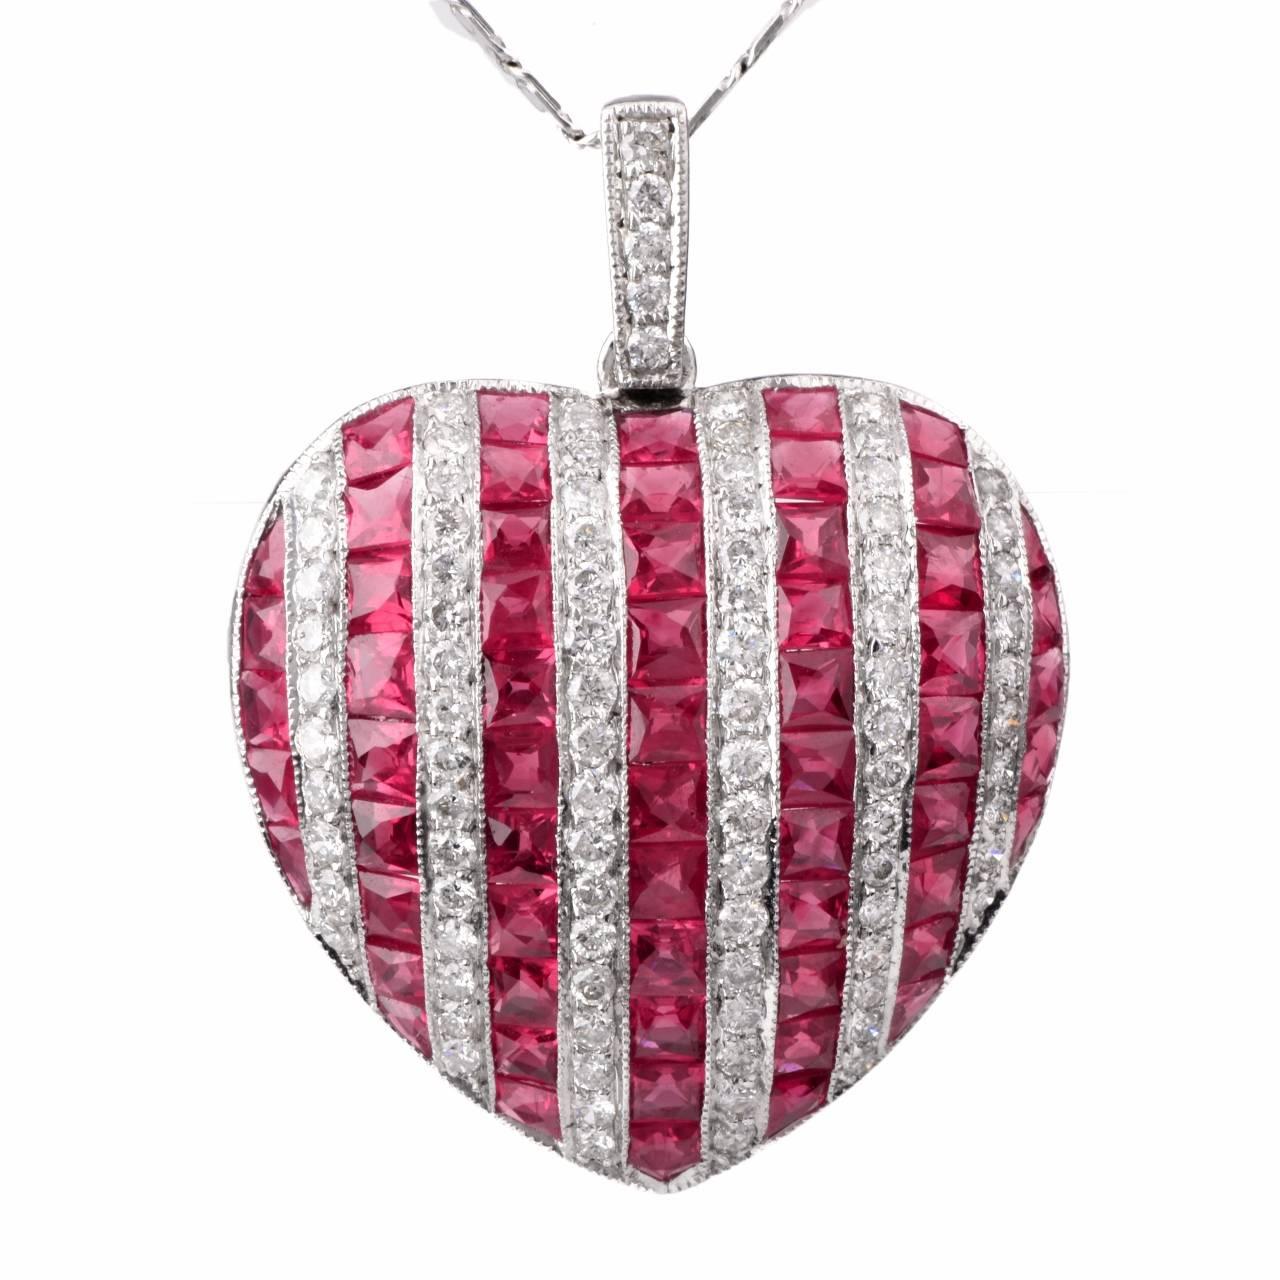  Ruby Diamond Gold Heart Pendant Necklace